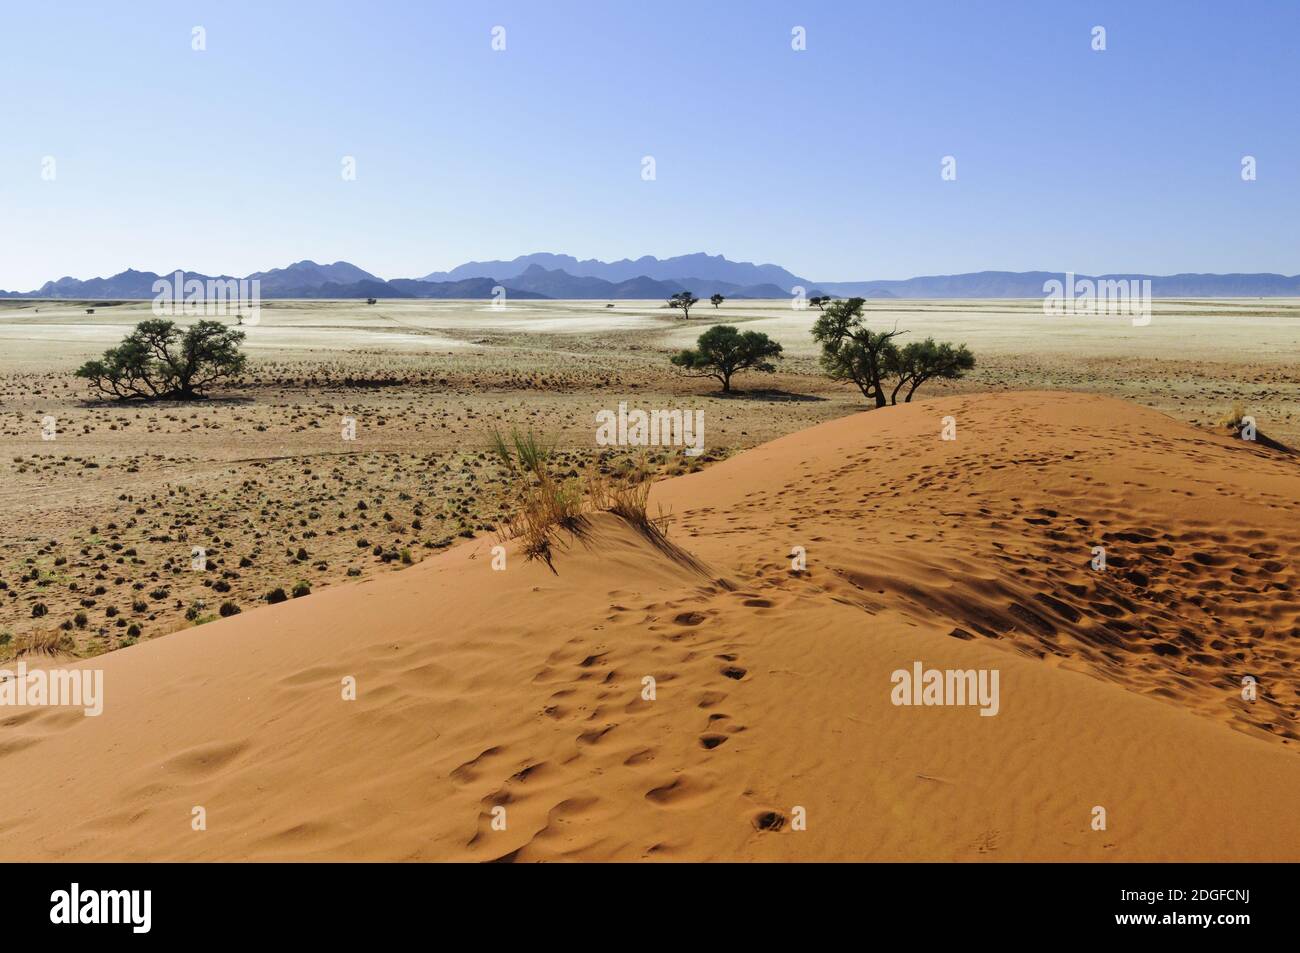 Dunes with acacia trees in the Namib desert, Namibia, Africa. Stock Photo